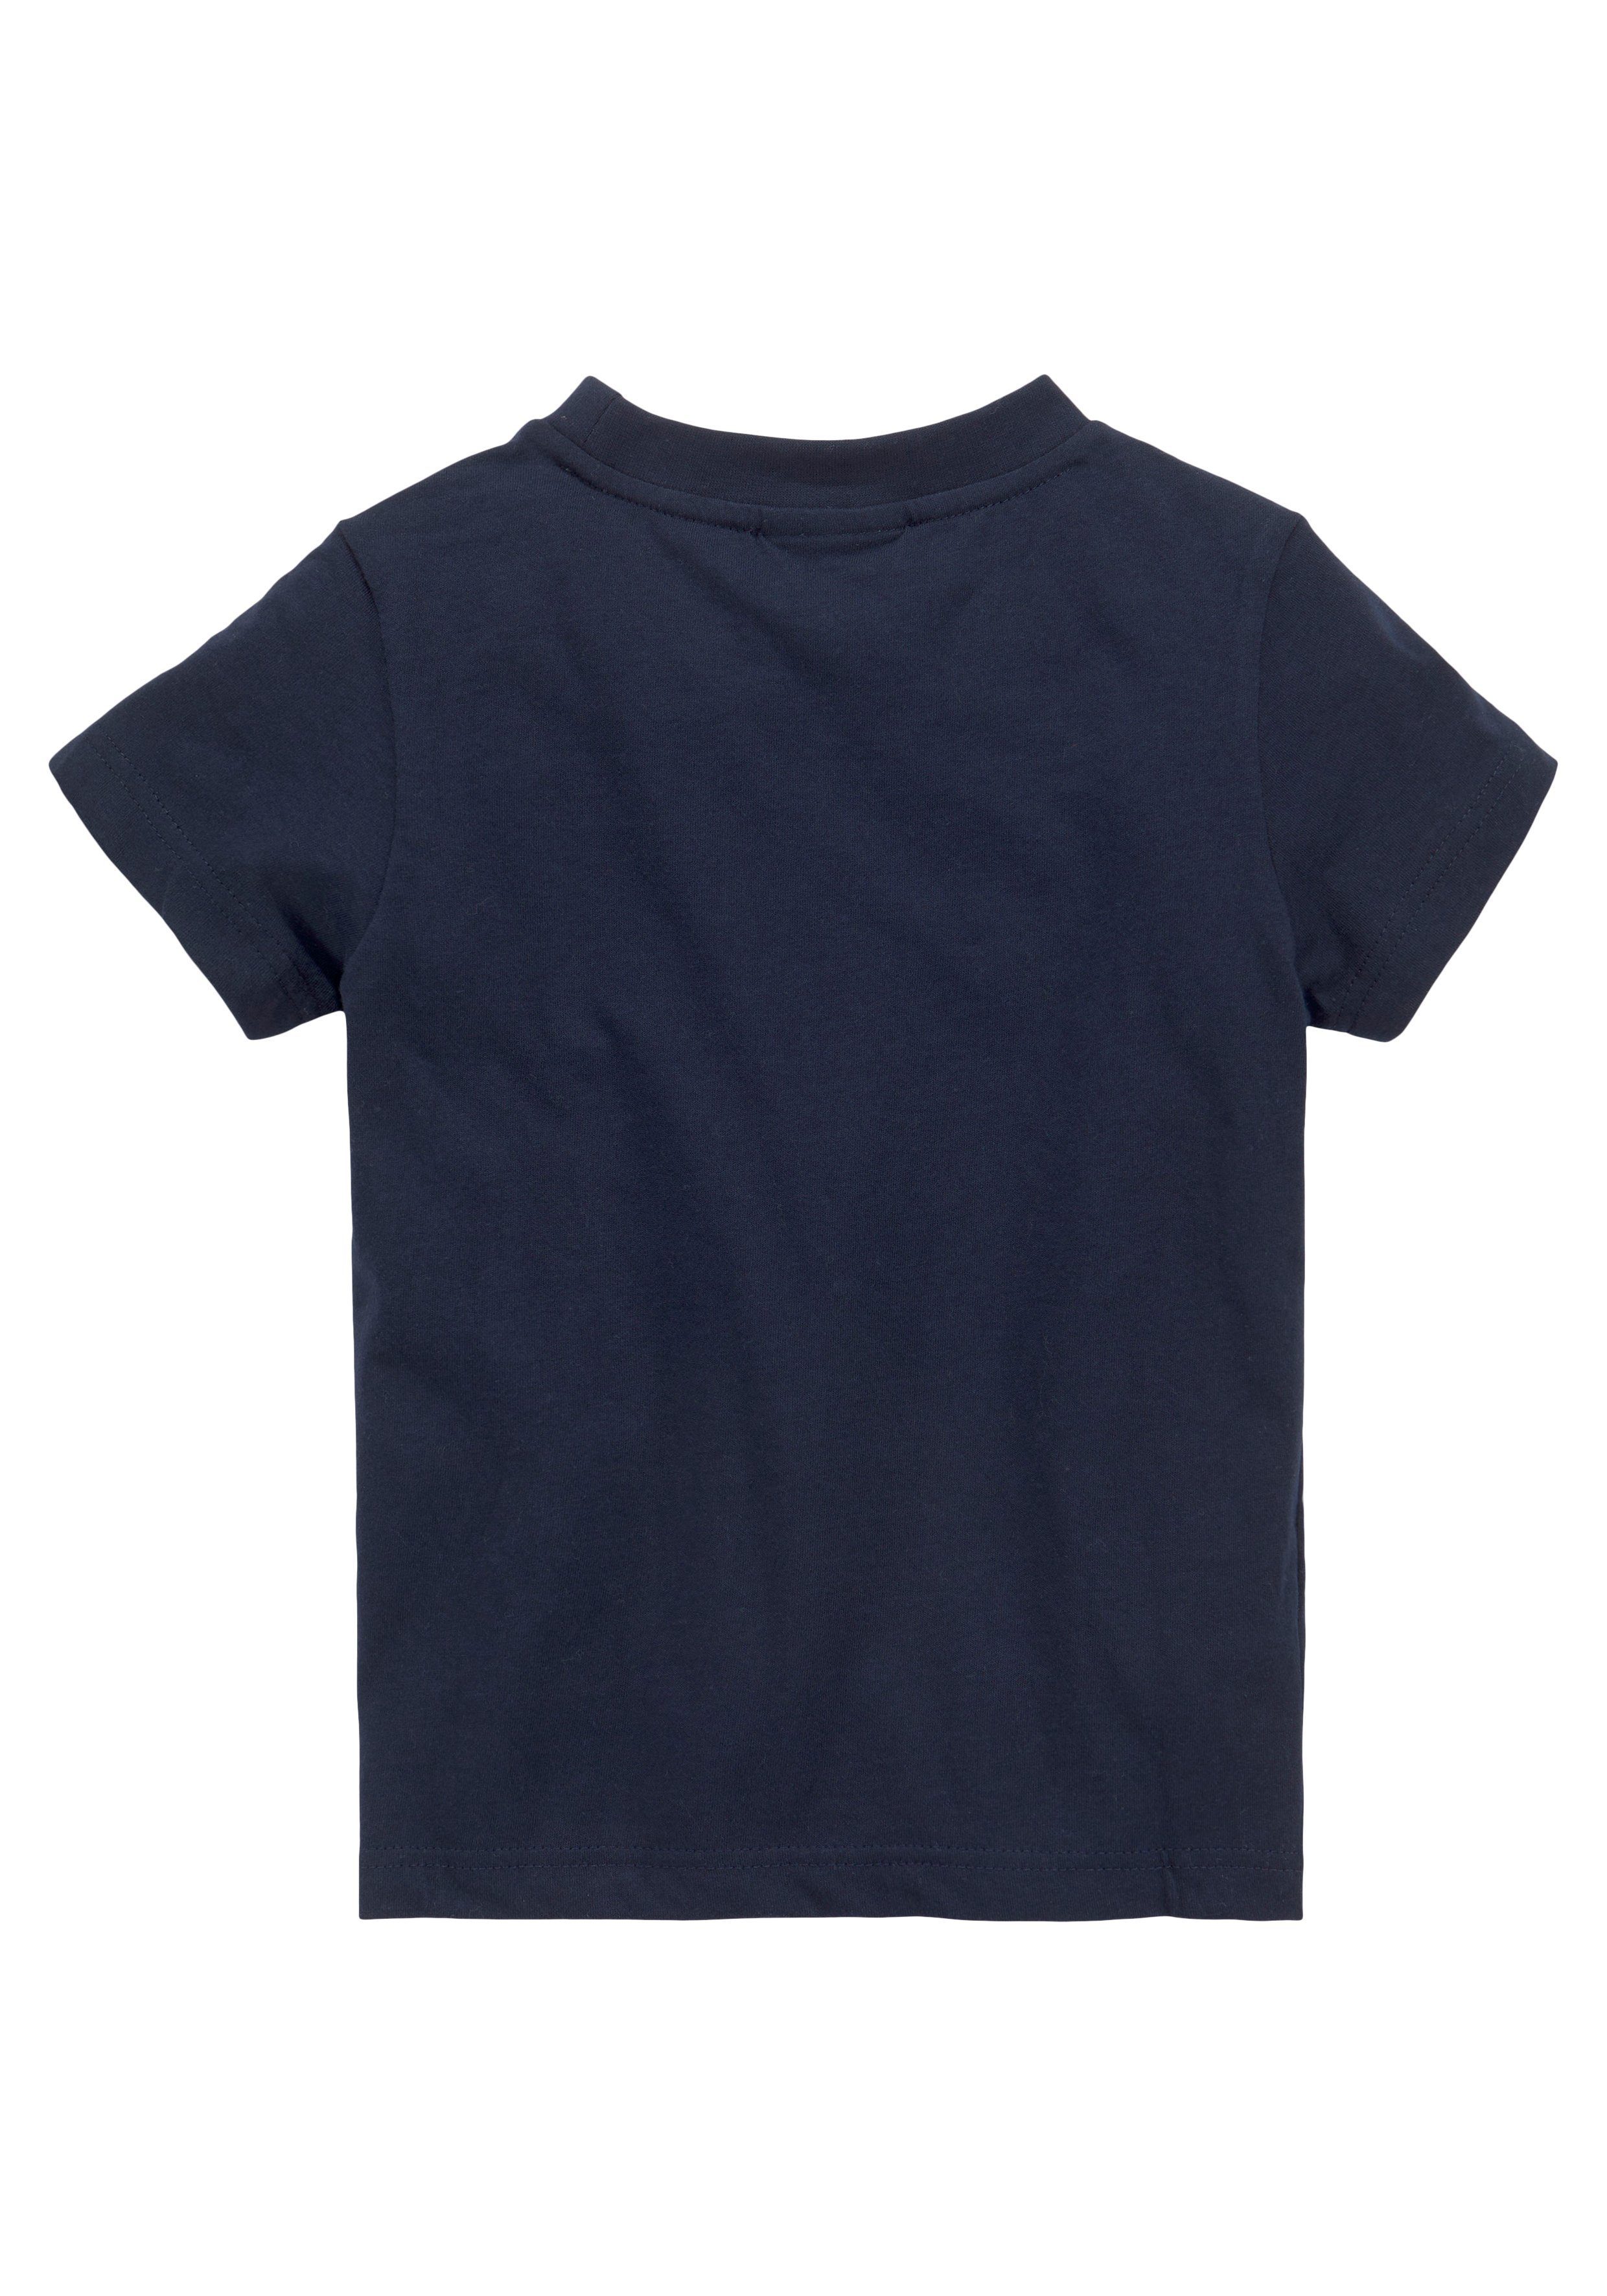 auf Brusthöhe NAVY Lacoste T-Shirt mit BLUE Lacoste-Krokodil